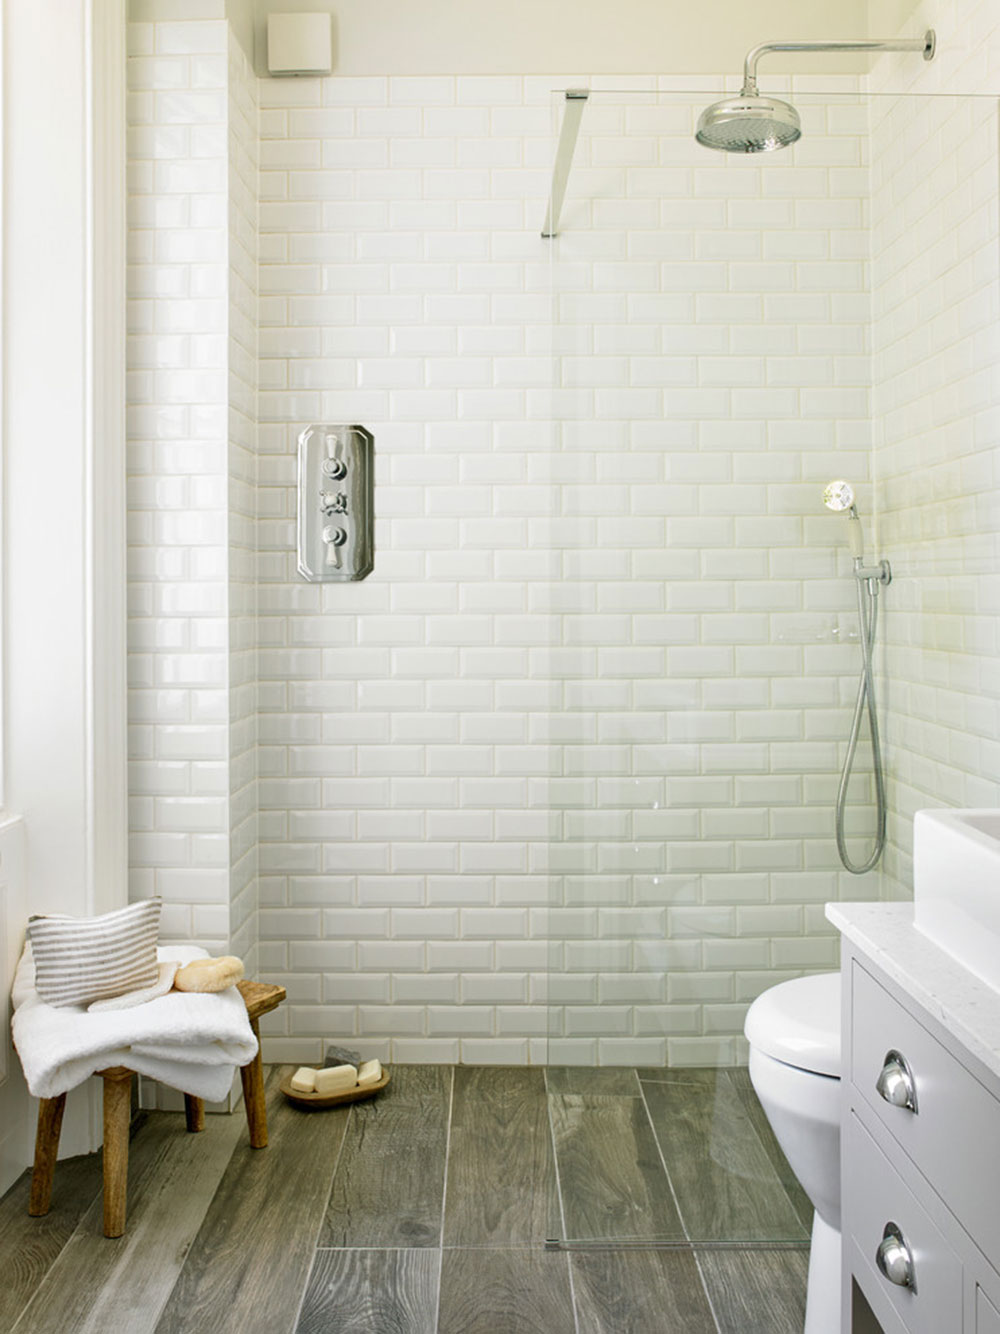 Surbiton-by-LEIVARS Small bathroom remodel tips to do it properly